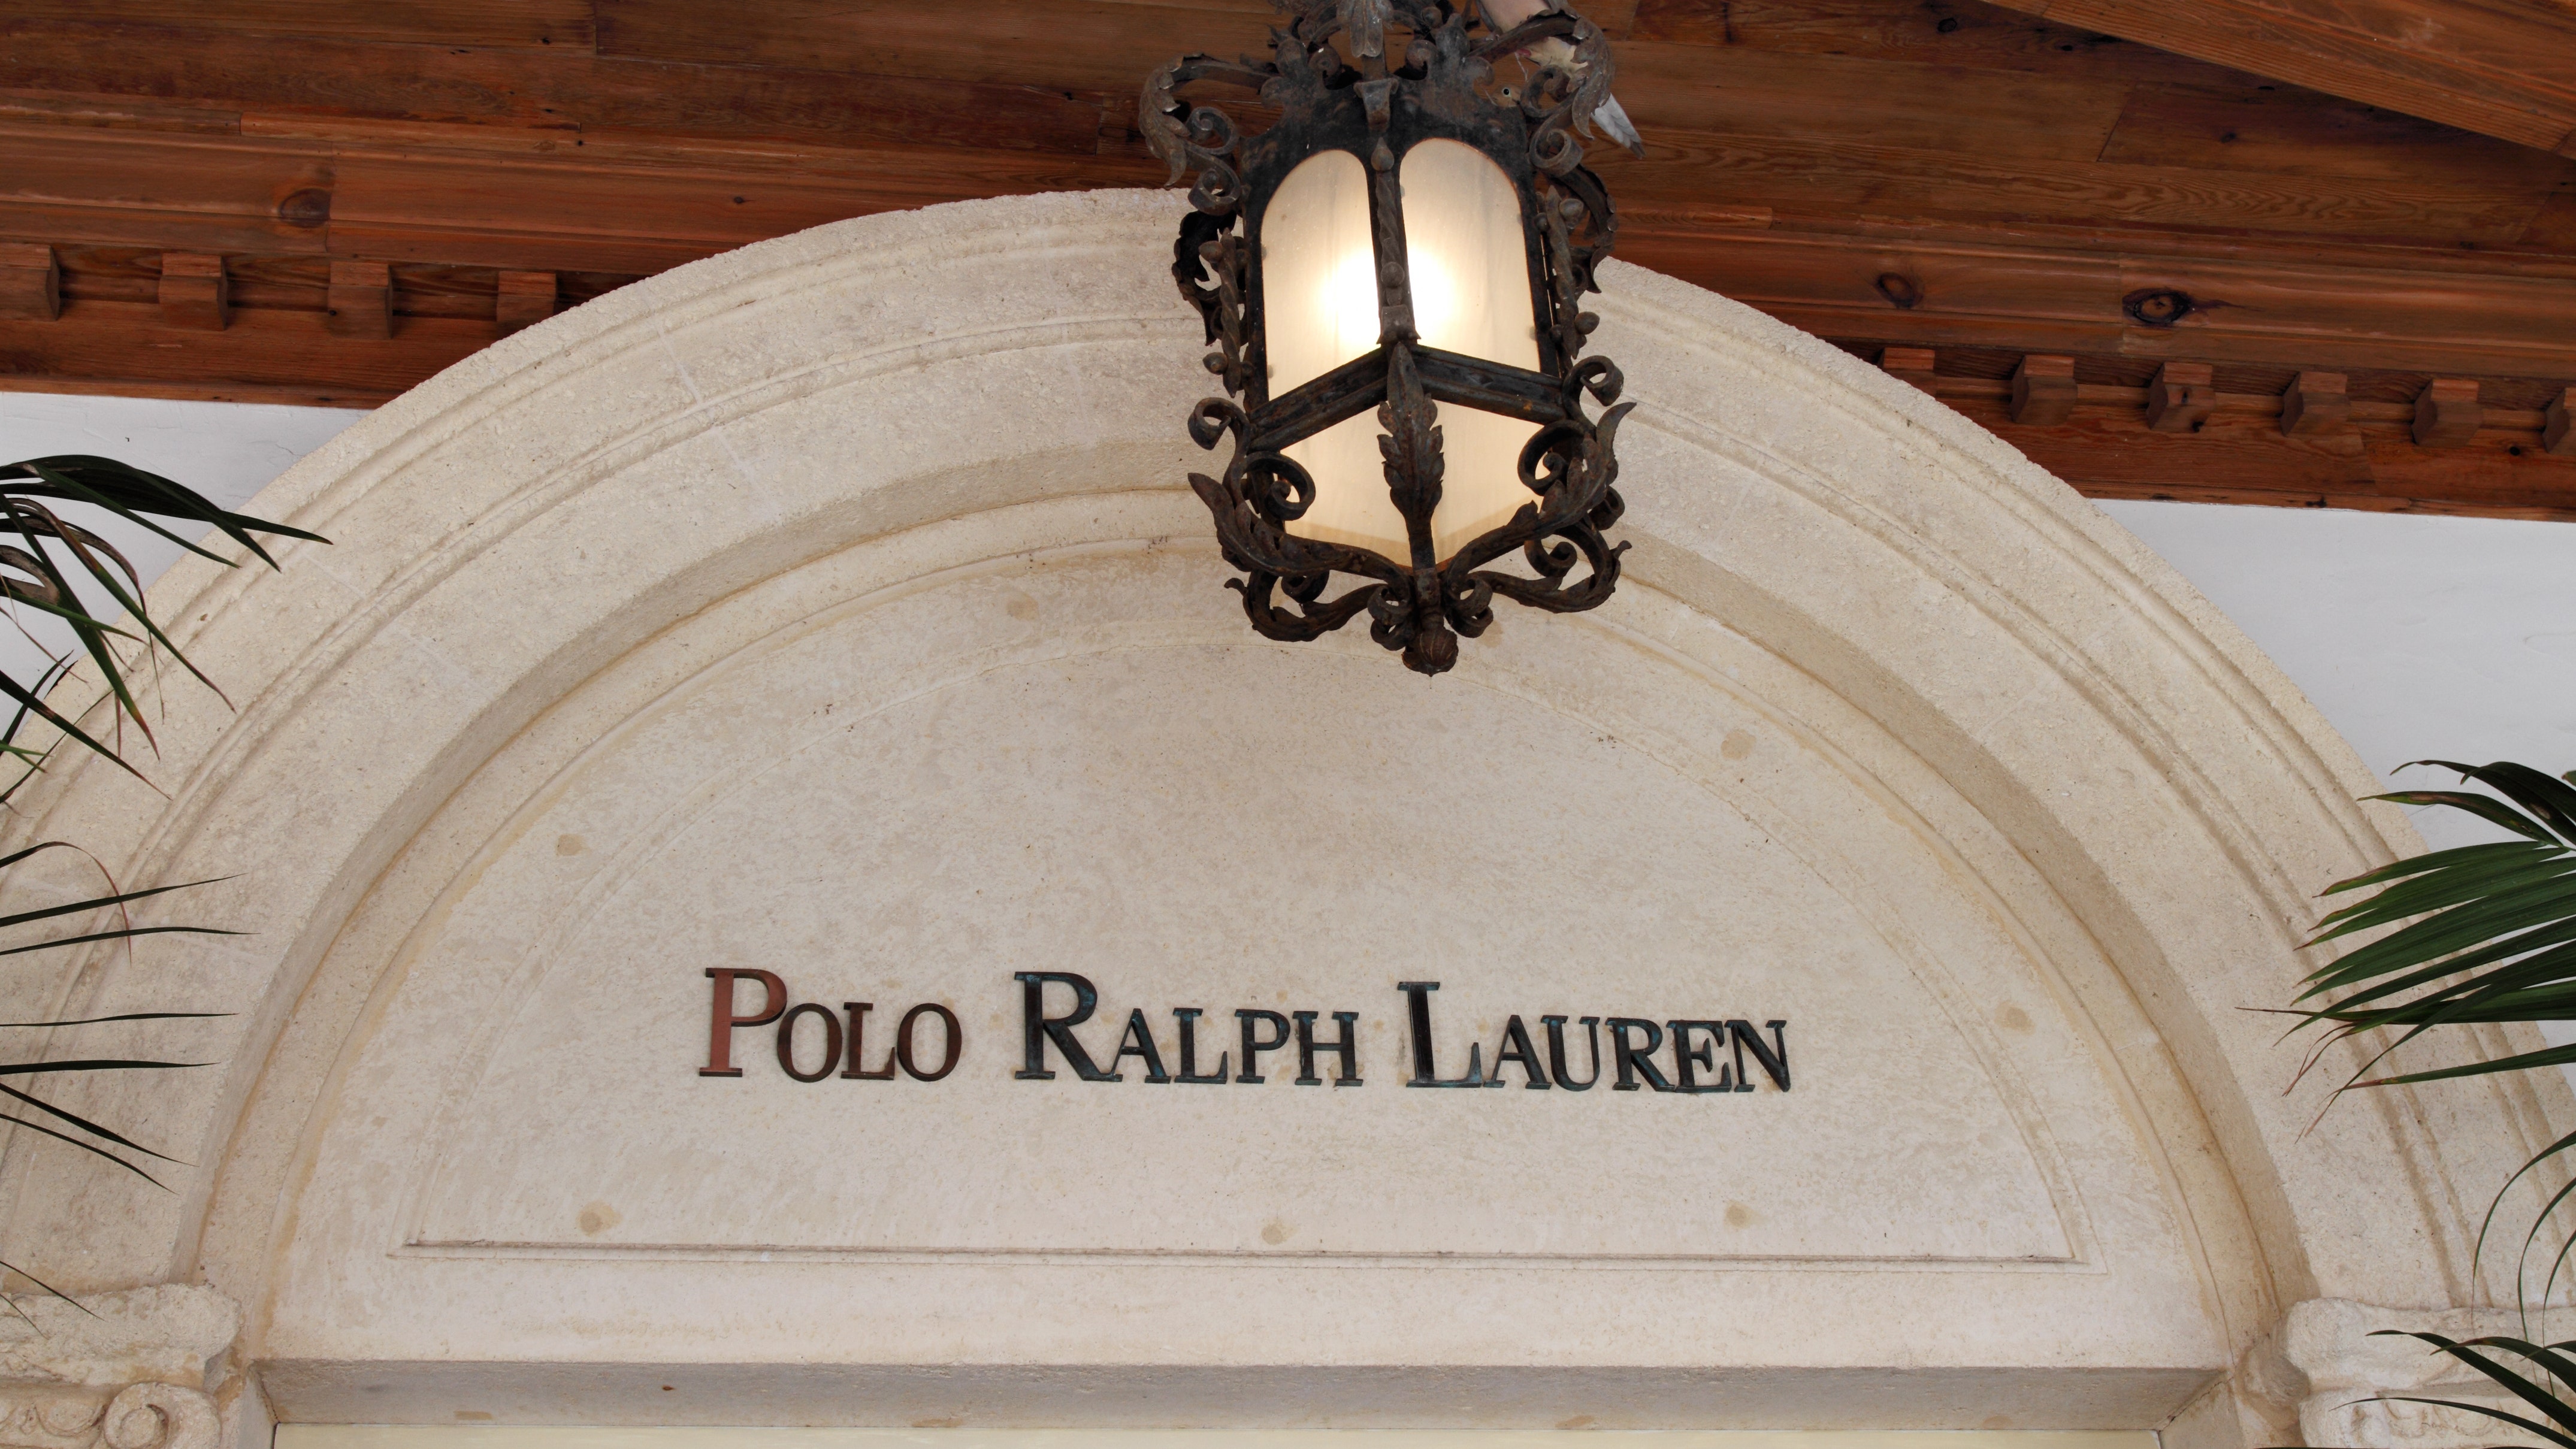 Ralph Lauren 'first' luxury brand to start a clothing rental business